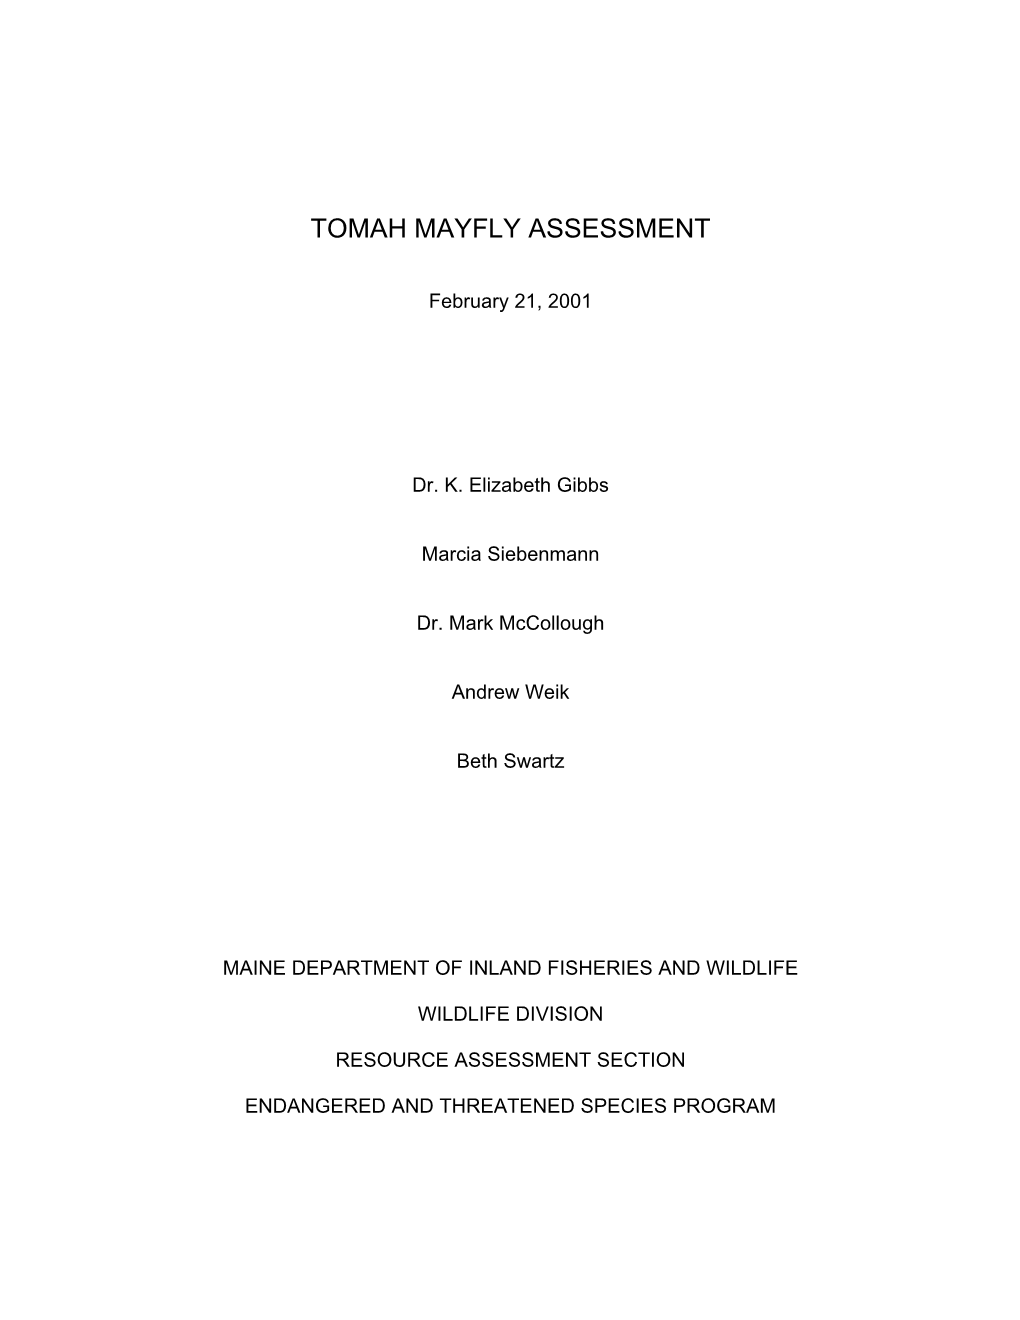 Tomah Mayfly Assessment